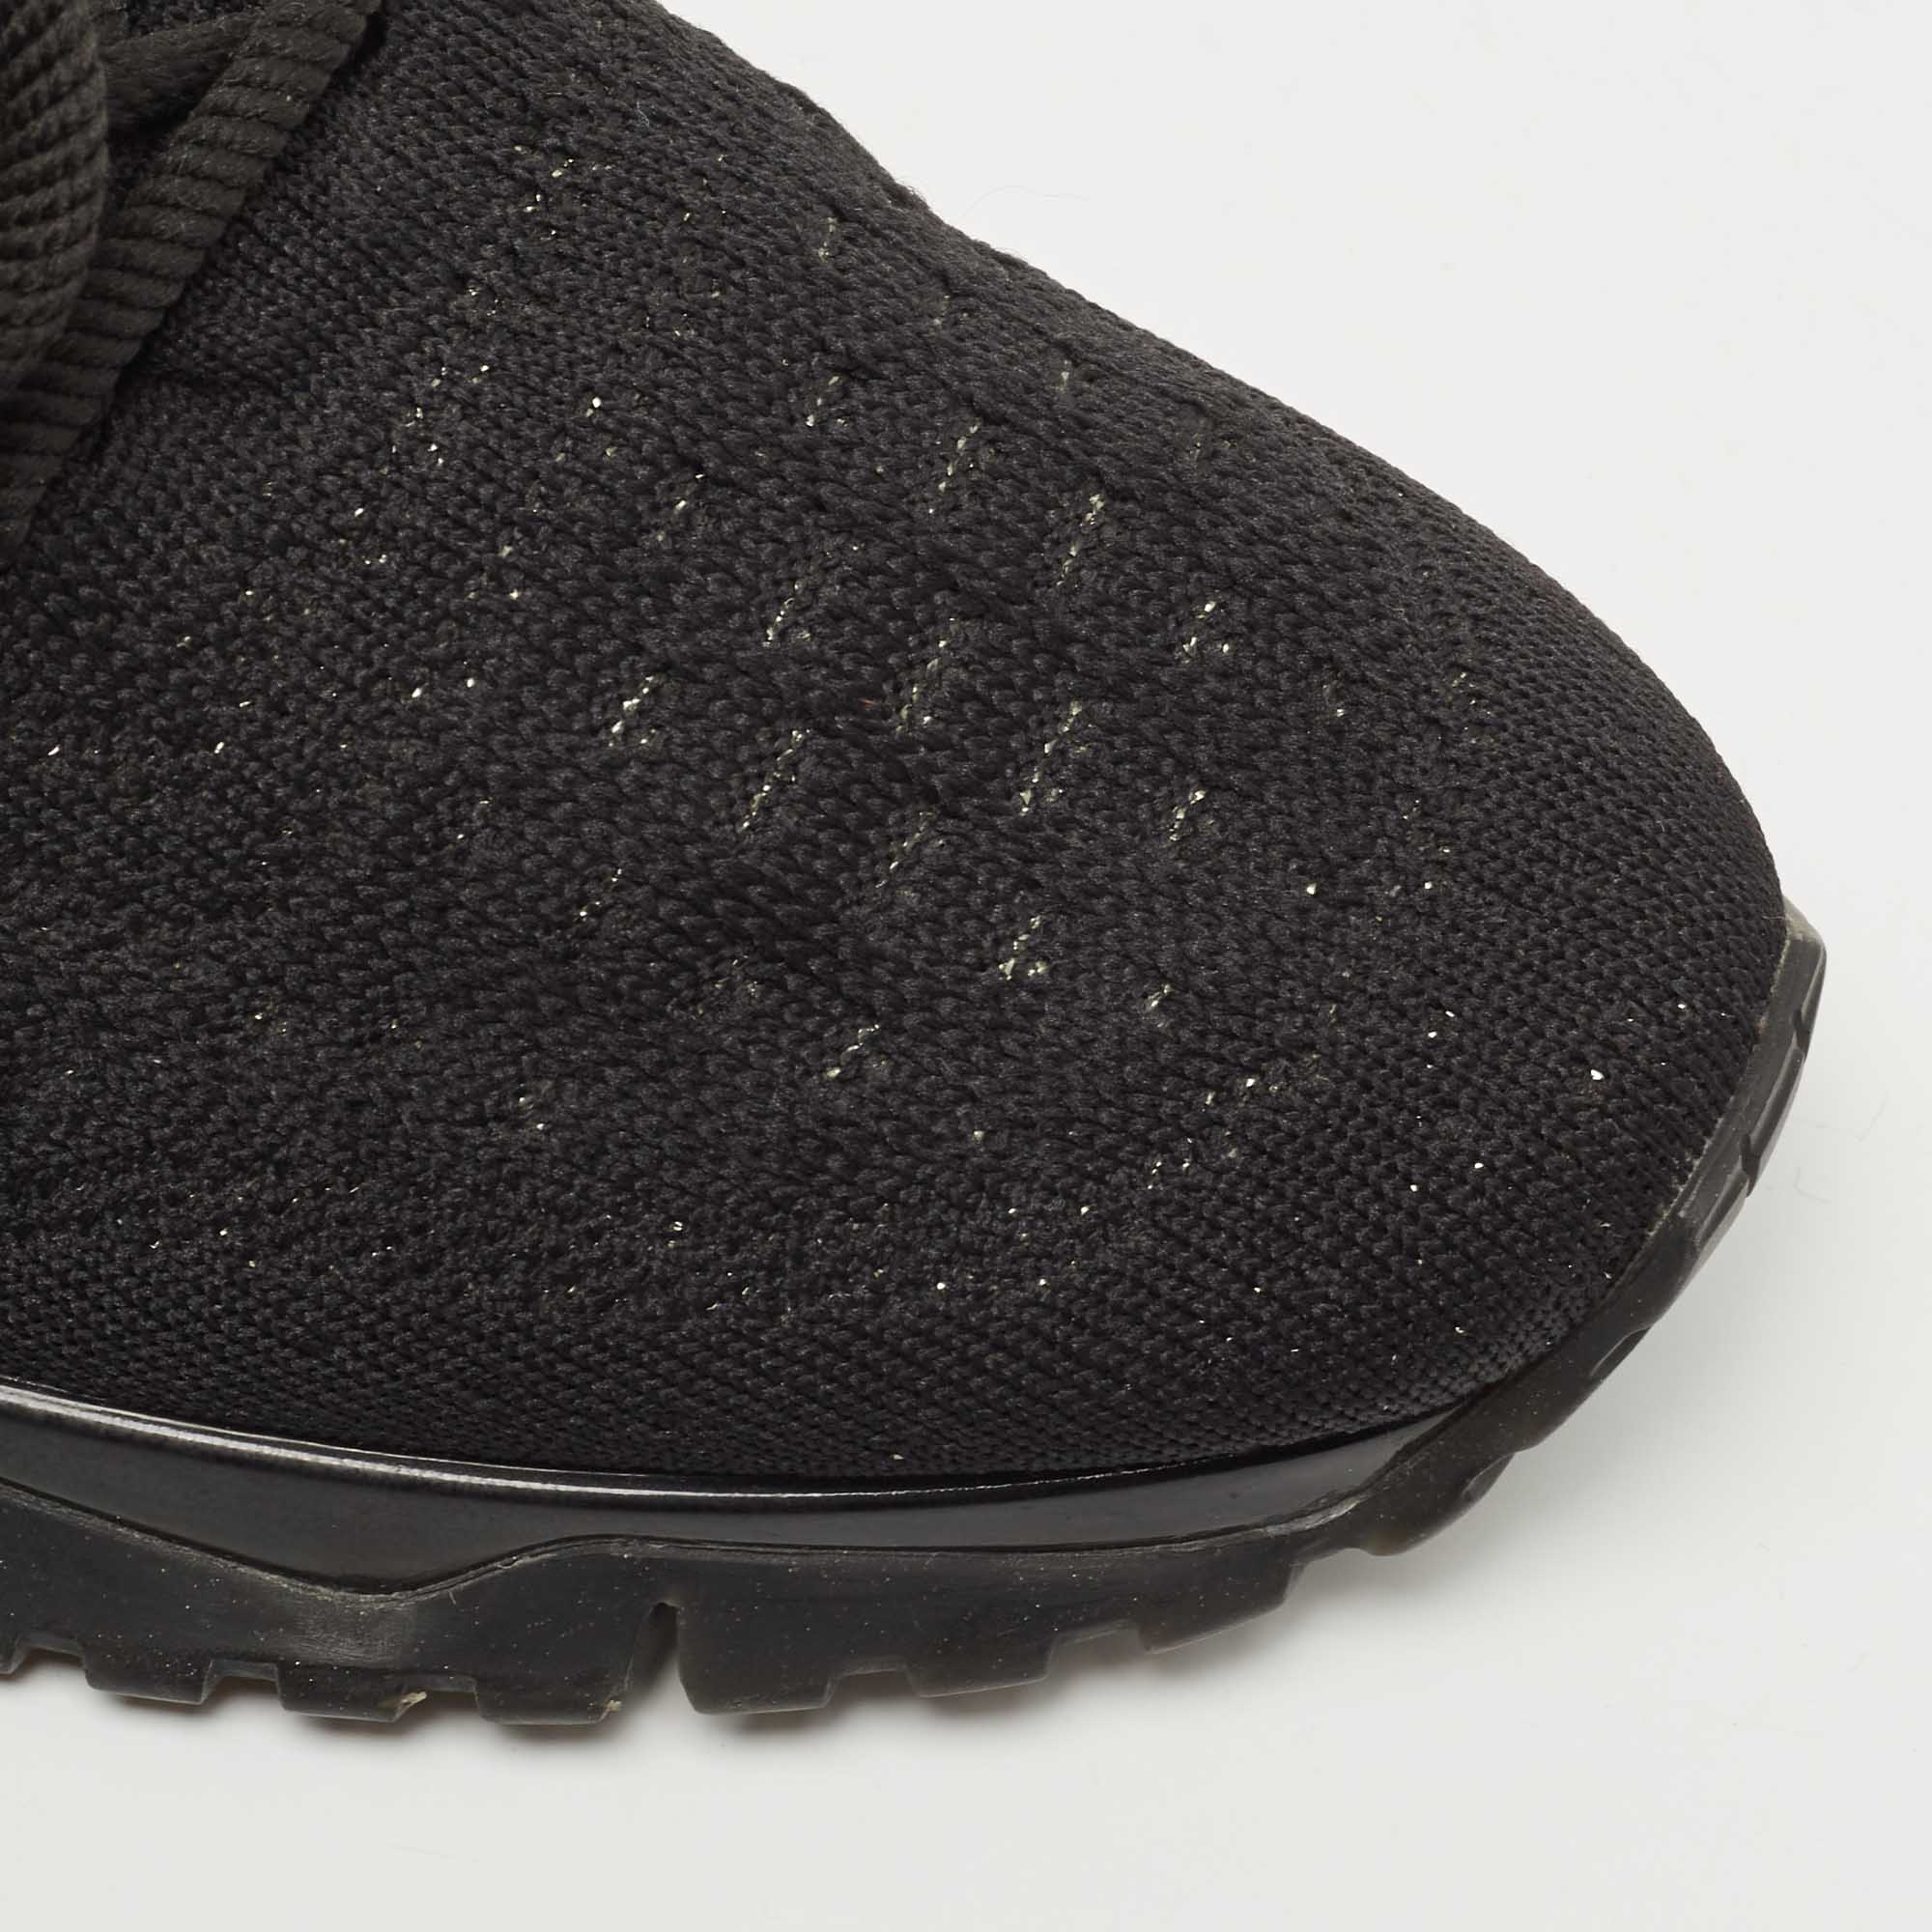 Louis Vuitton Black Knit Fabric VNR Low Top Sneakers Size 38.5 - BOPF